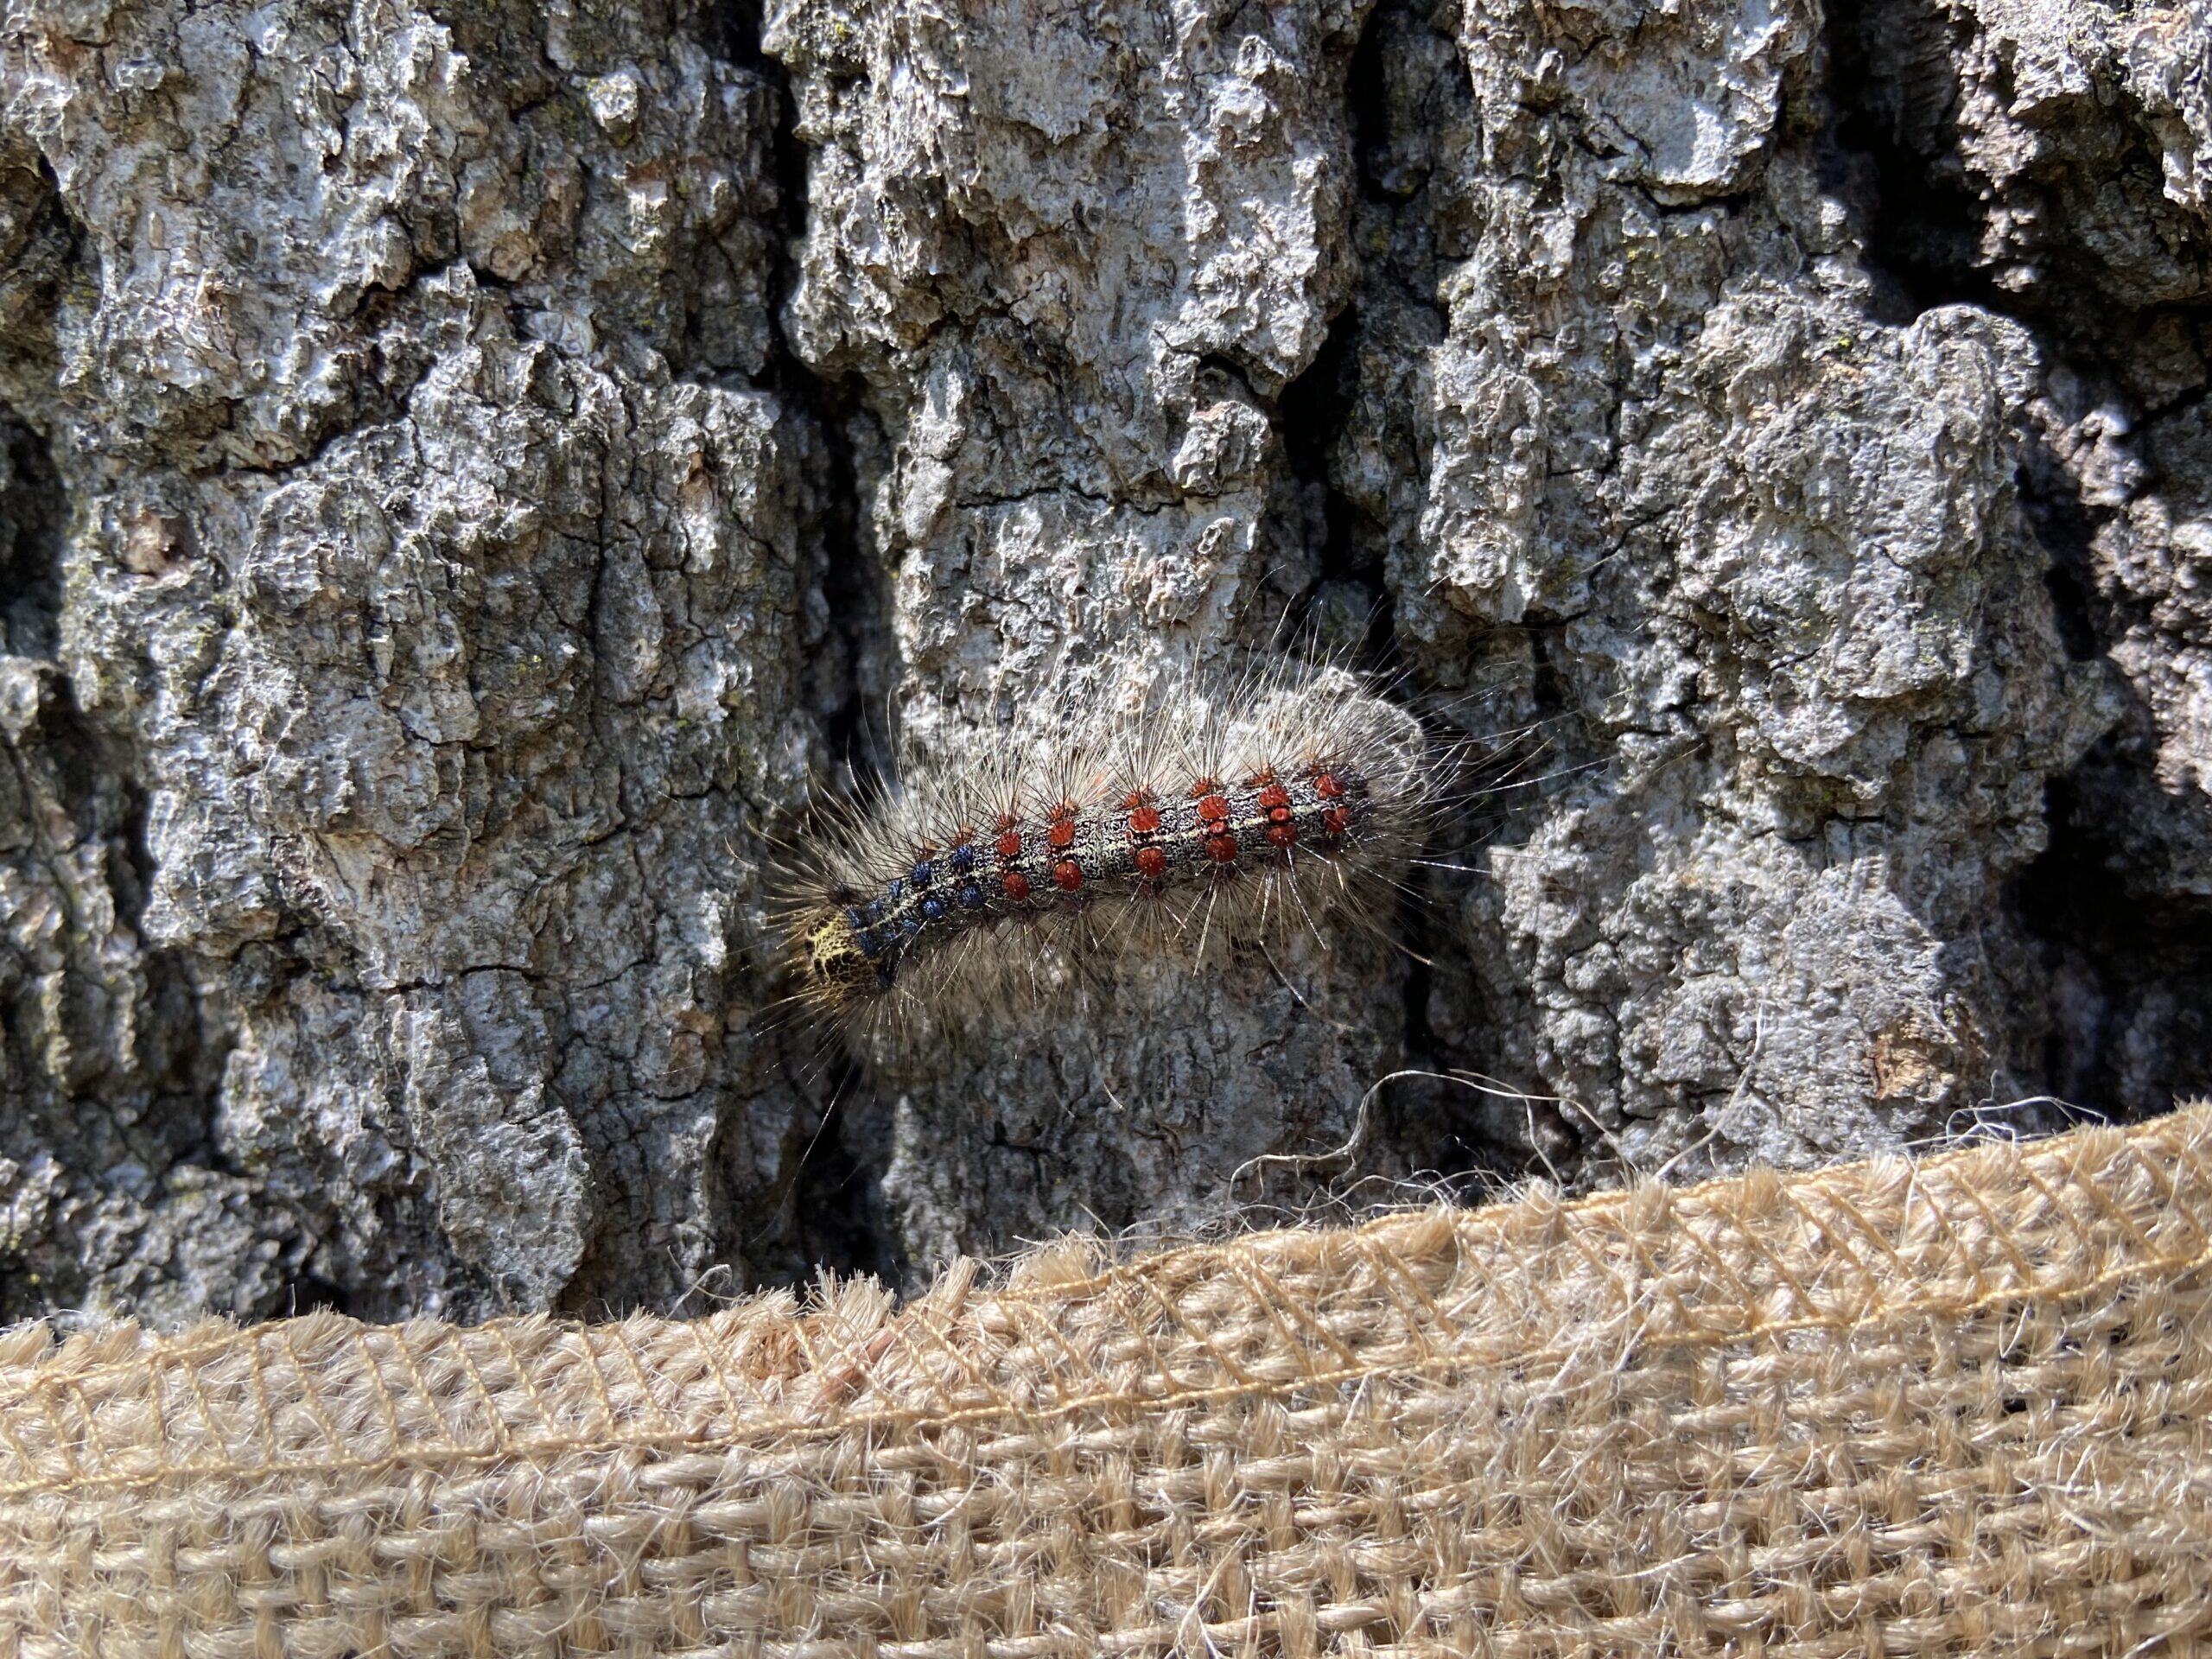 A spongy moth caterpillar closeup.